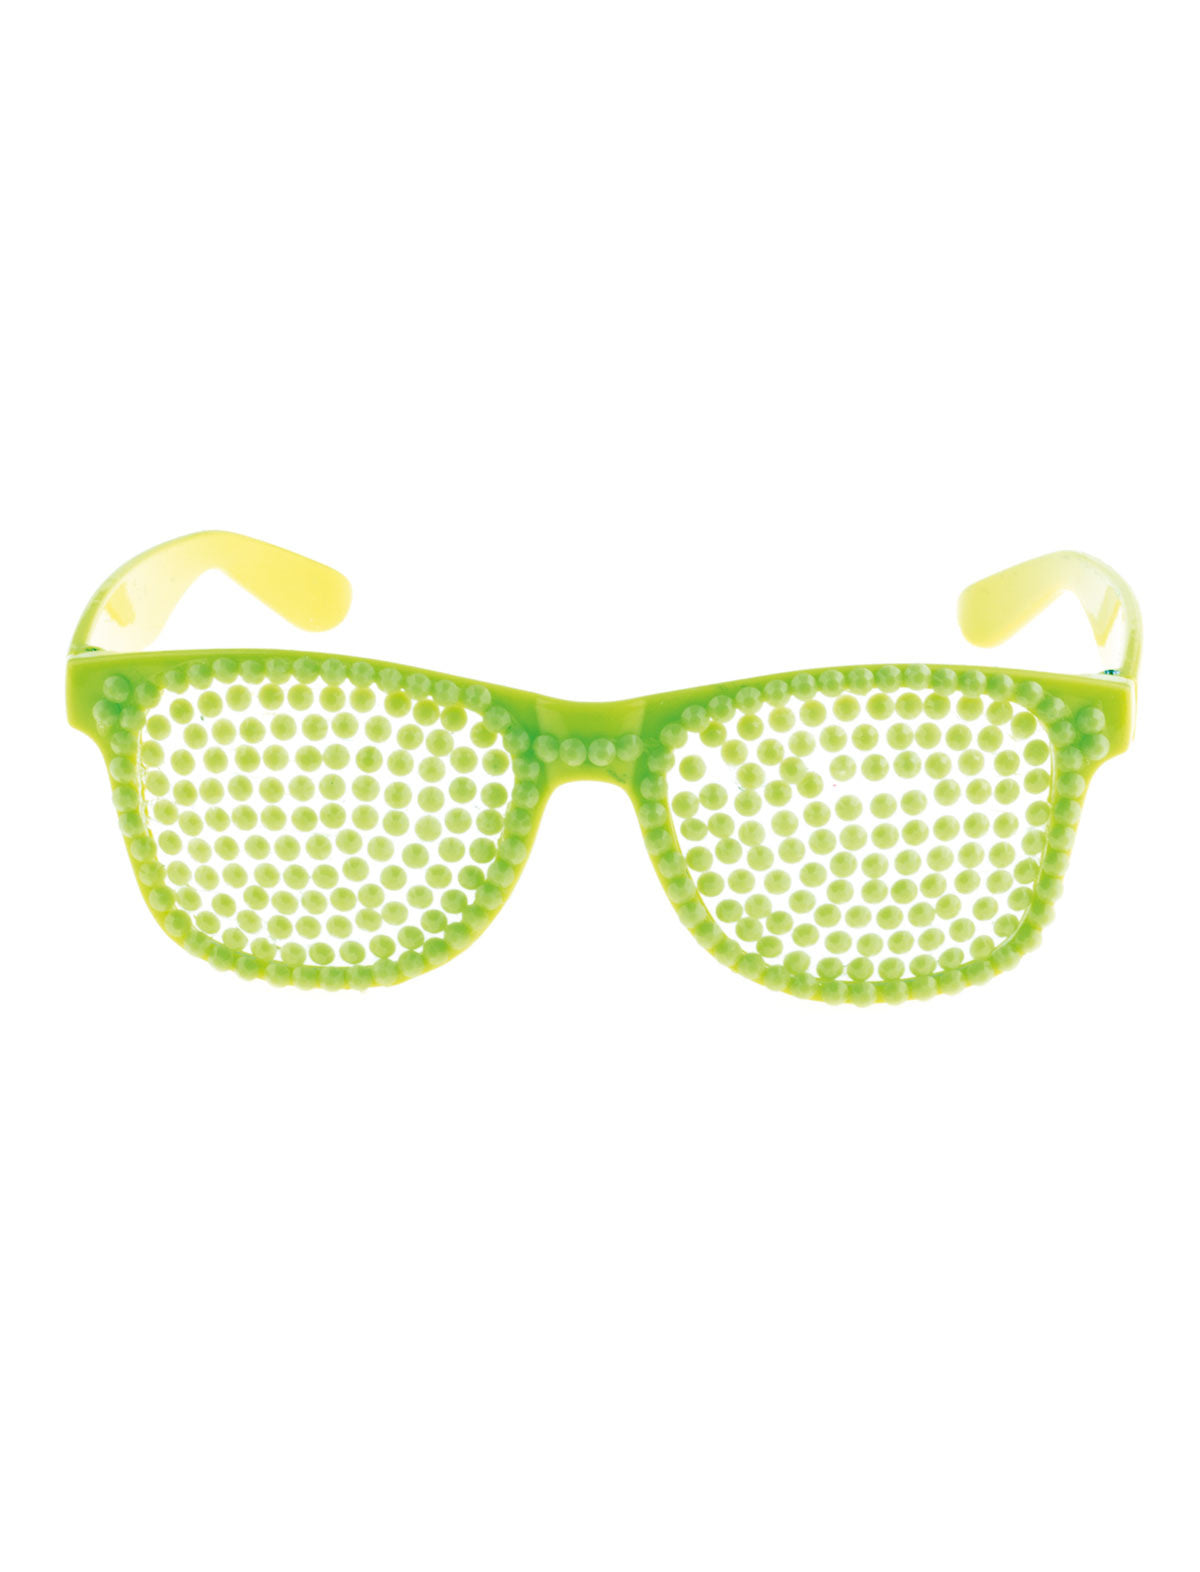 Mooie disco bril met parels in neon groen